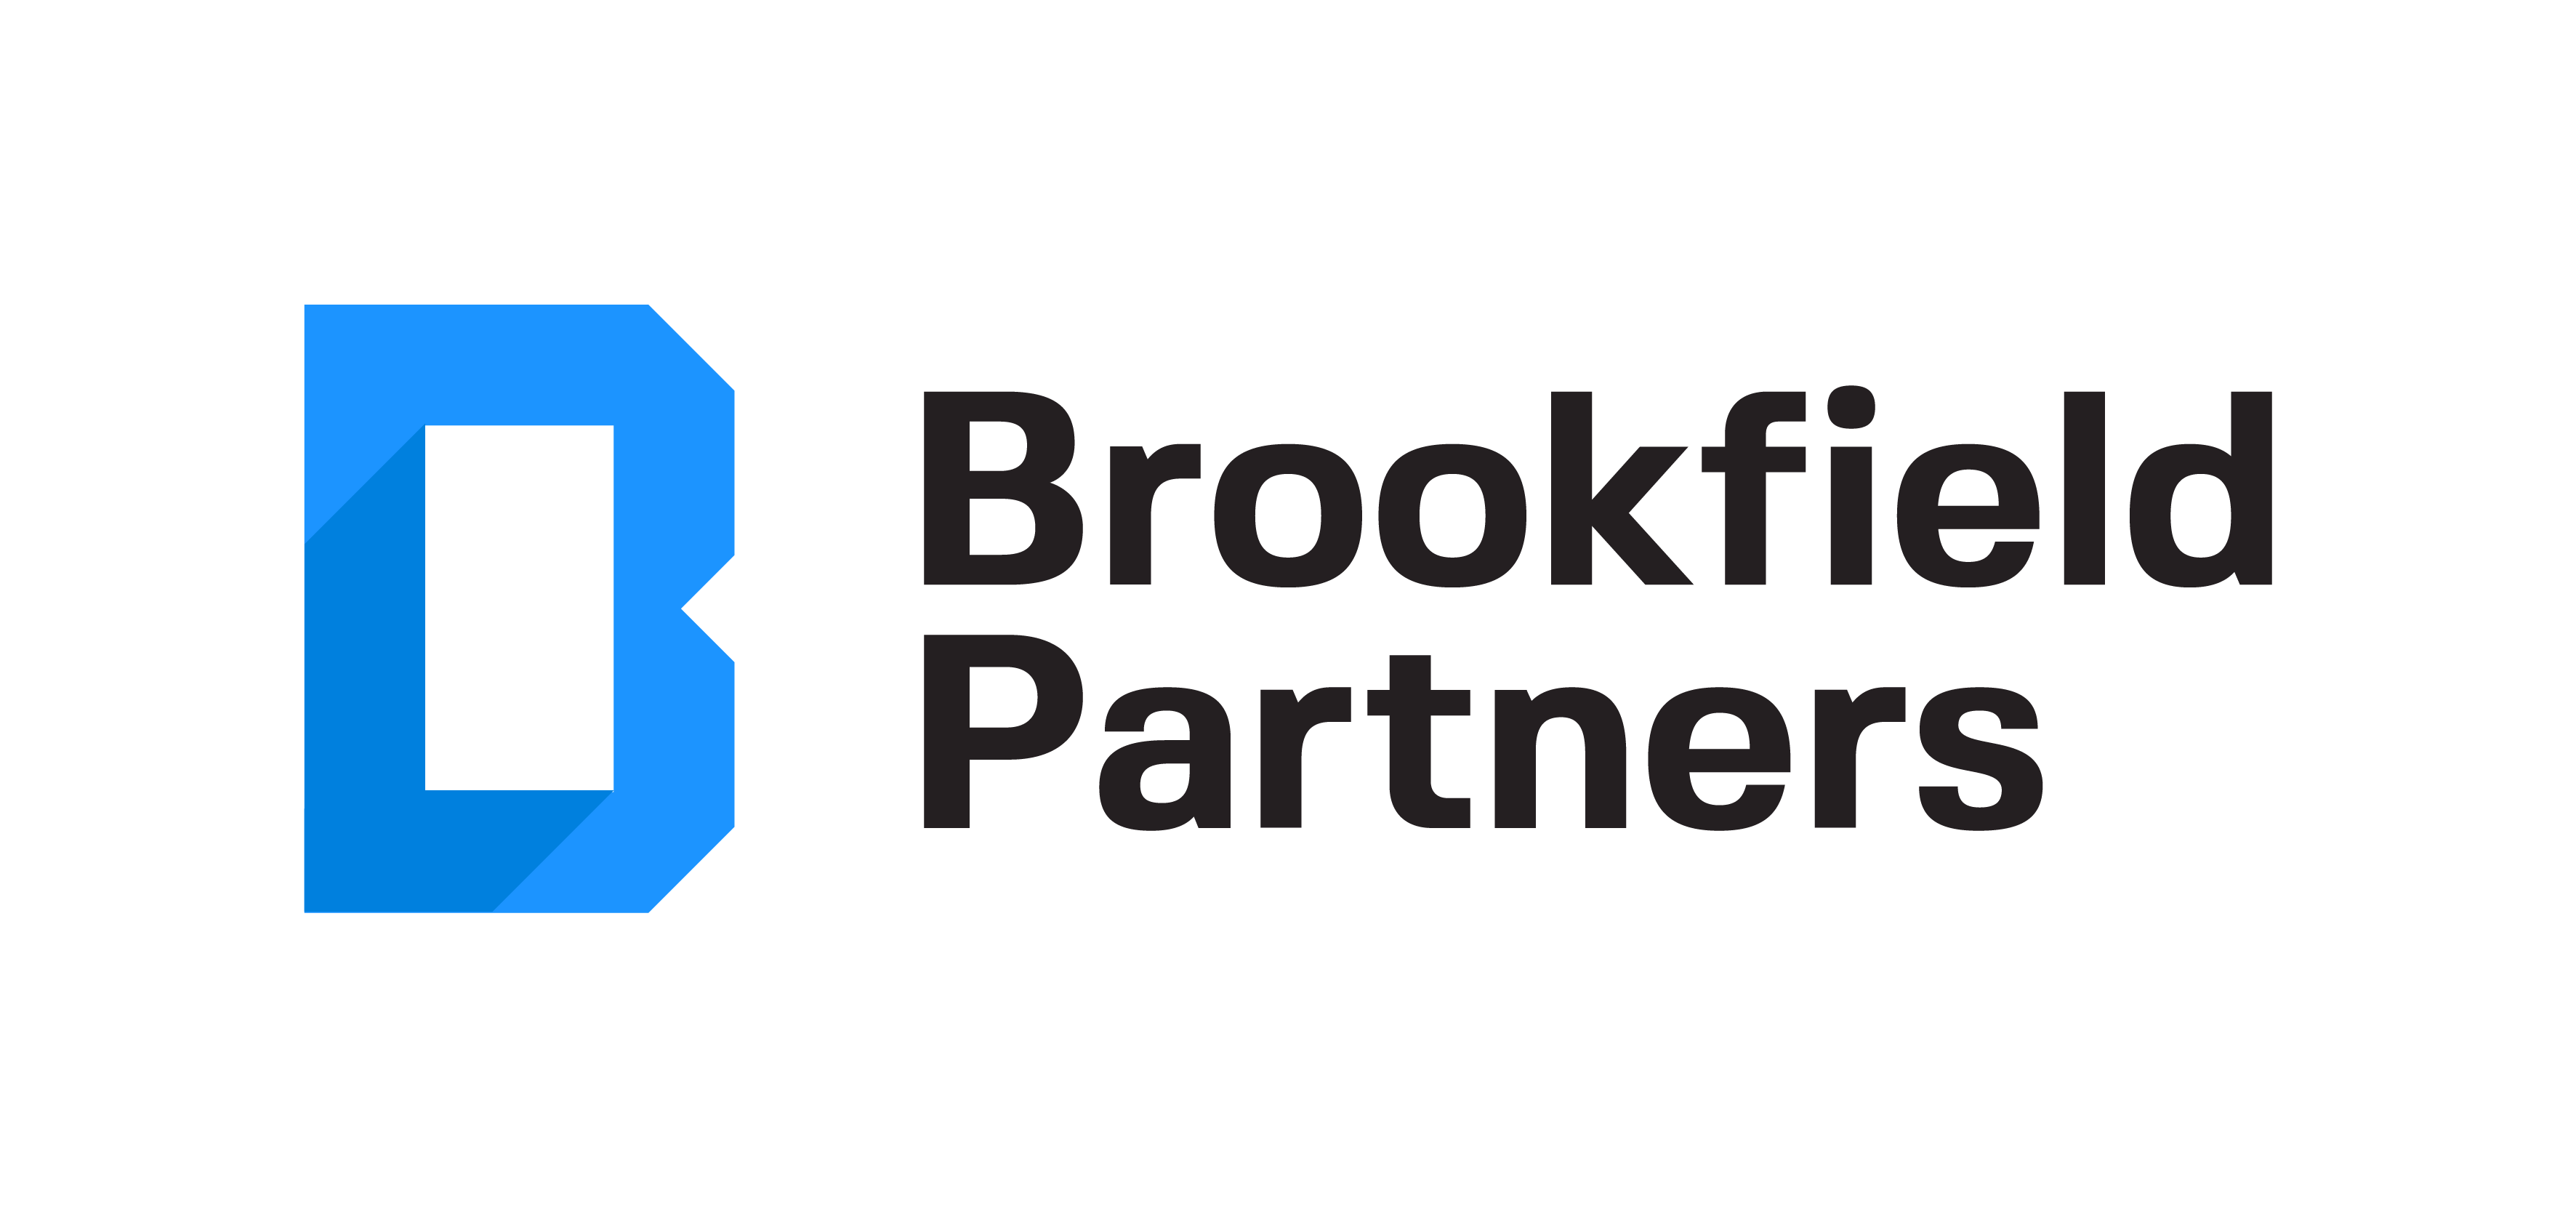 Brookfield Partners logo